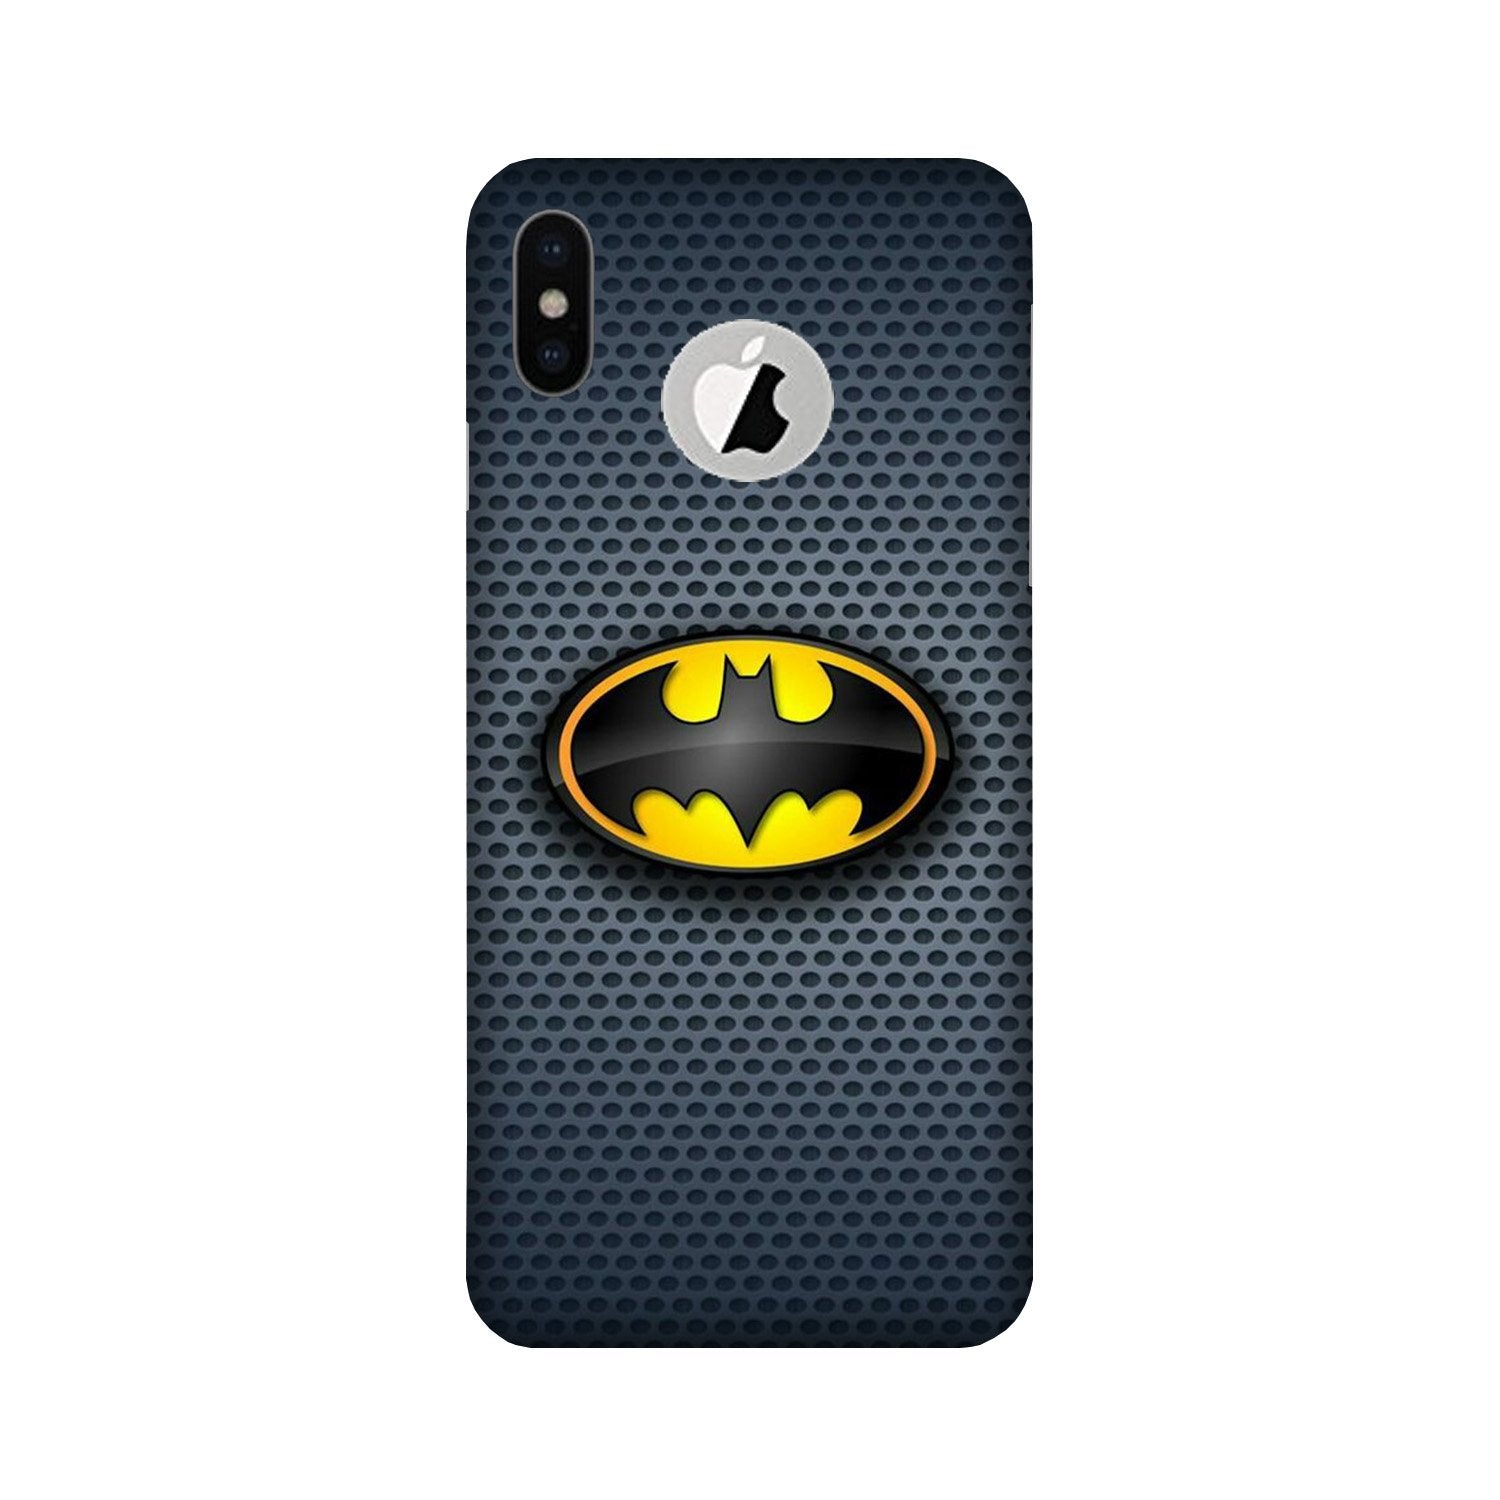 Batman Case for iPhone X logo cut (Design No. 244)